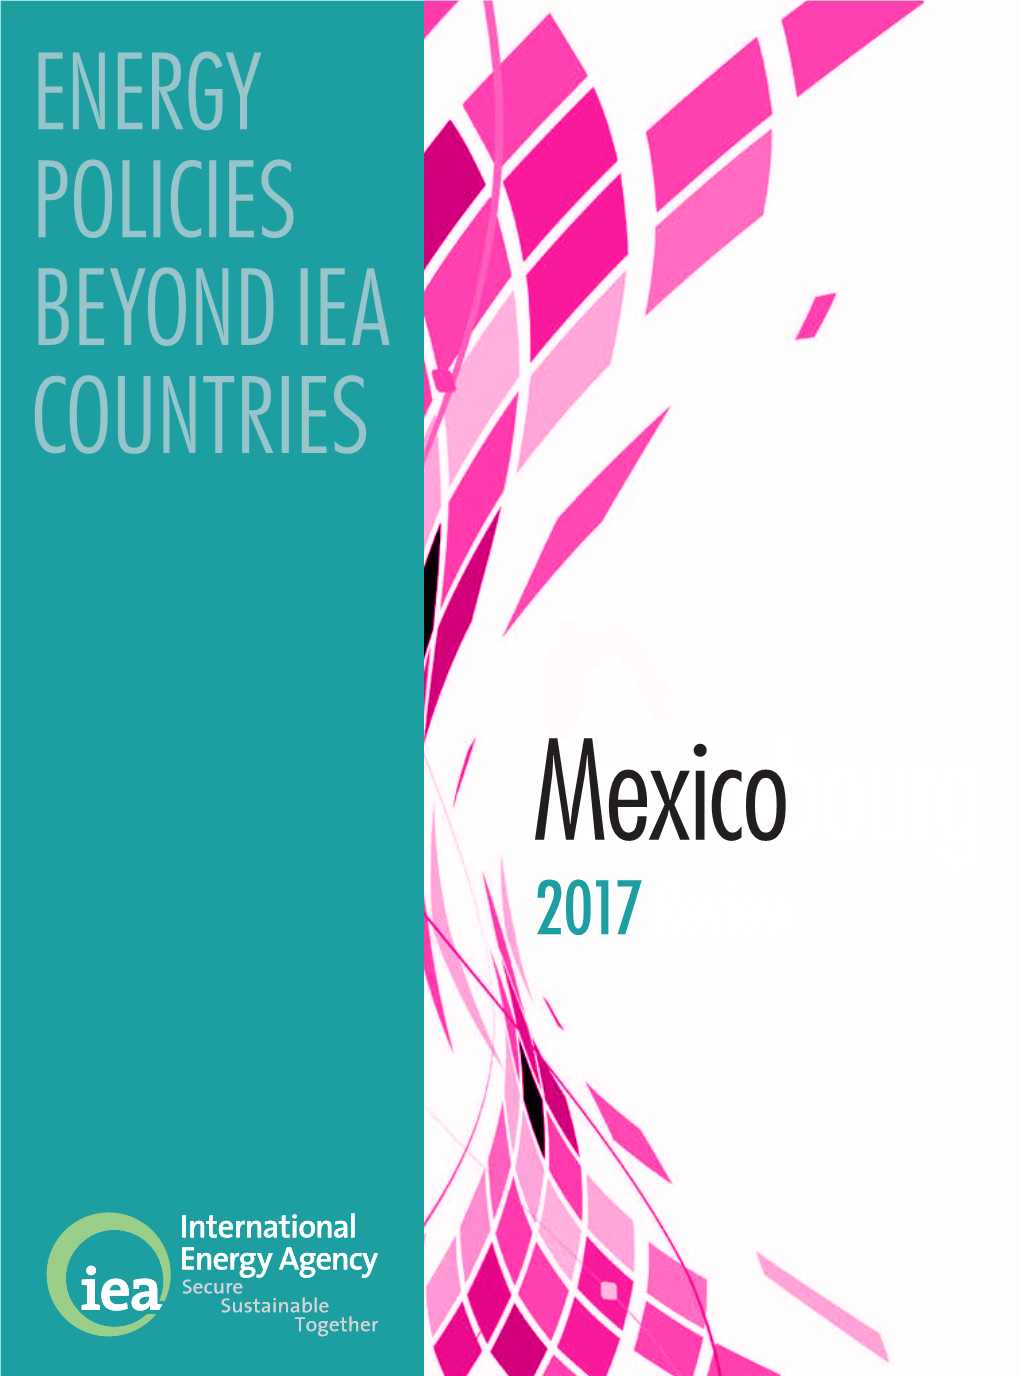 Energy Policies Beyon IEA Countries: Mexico 2017